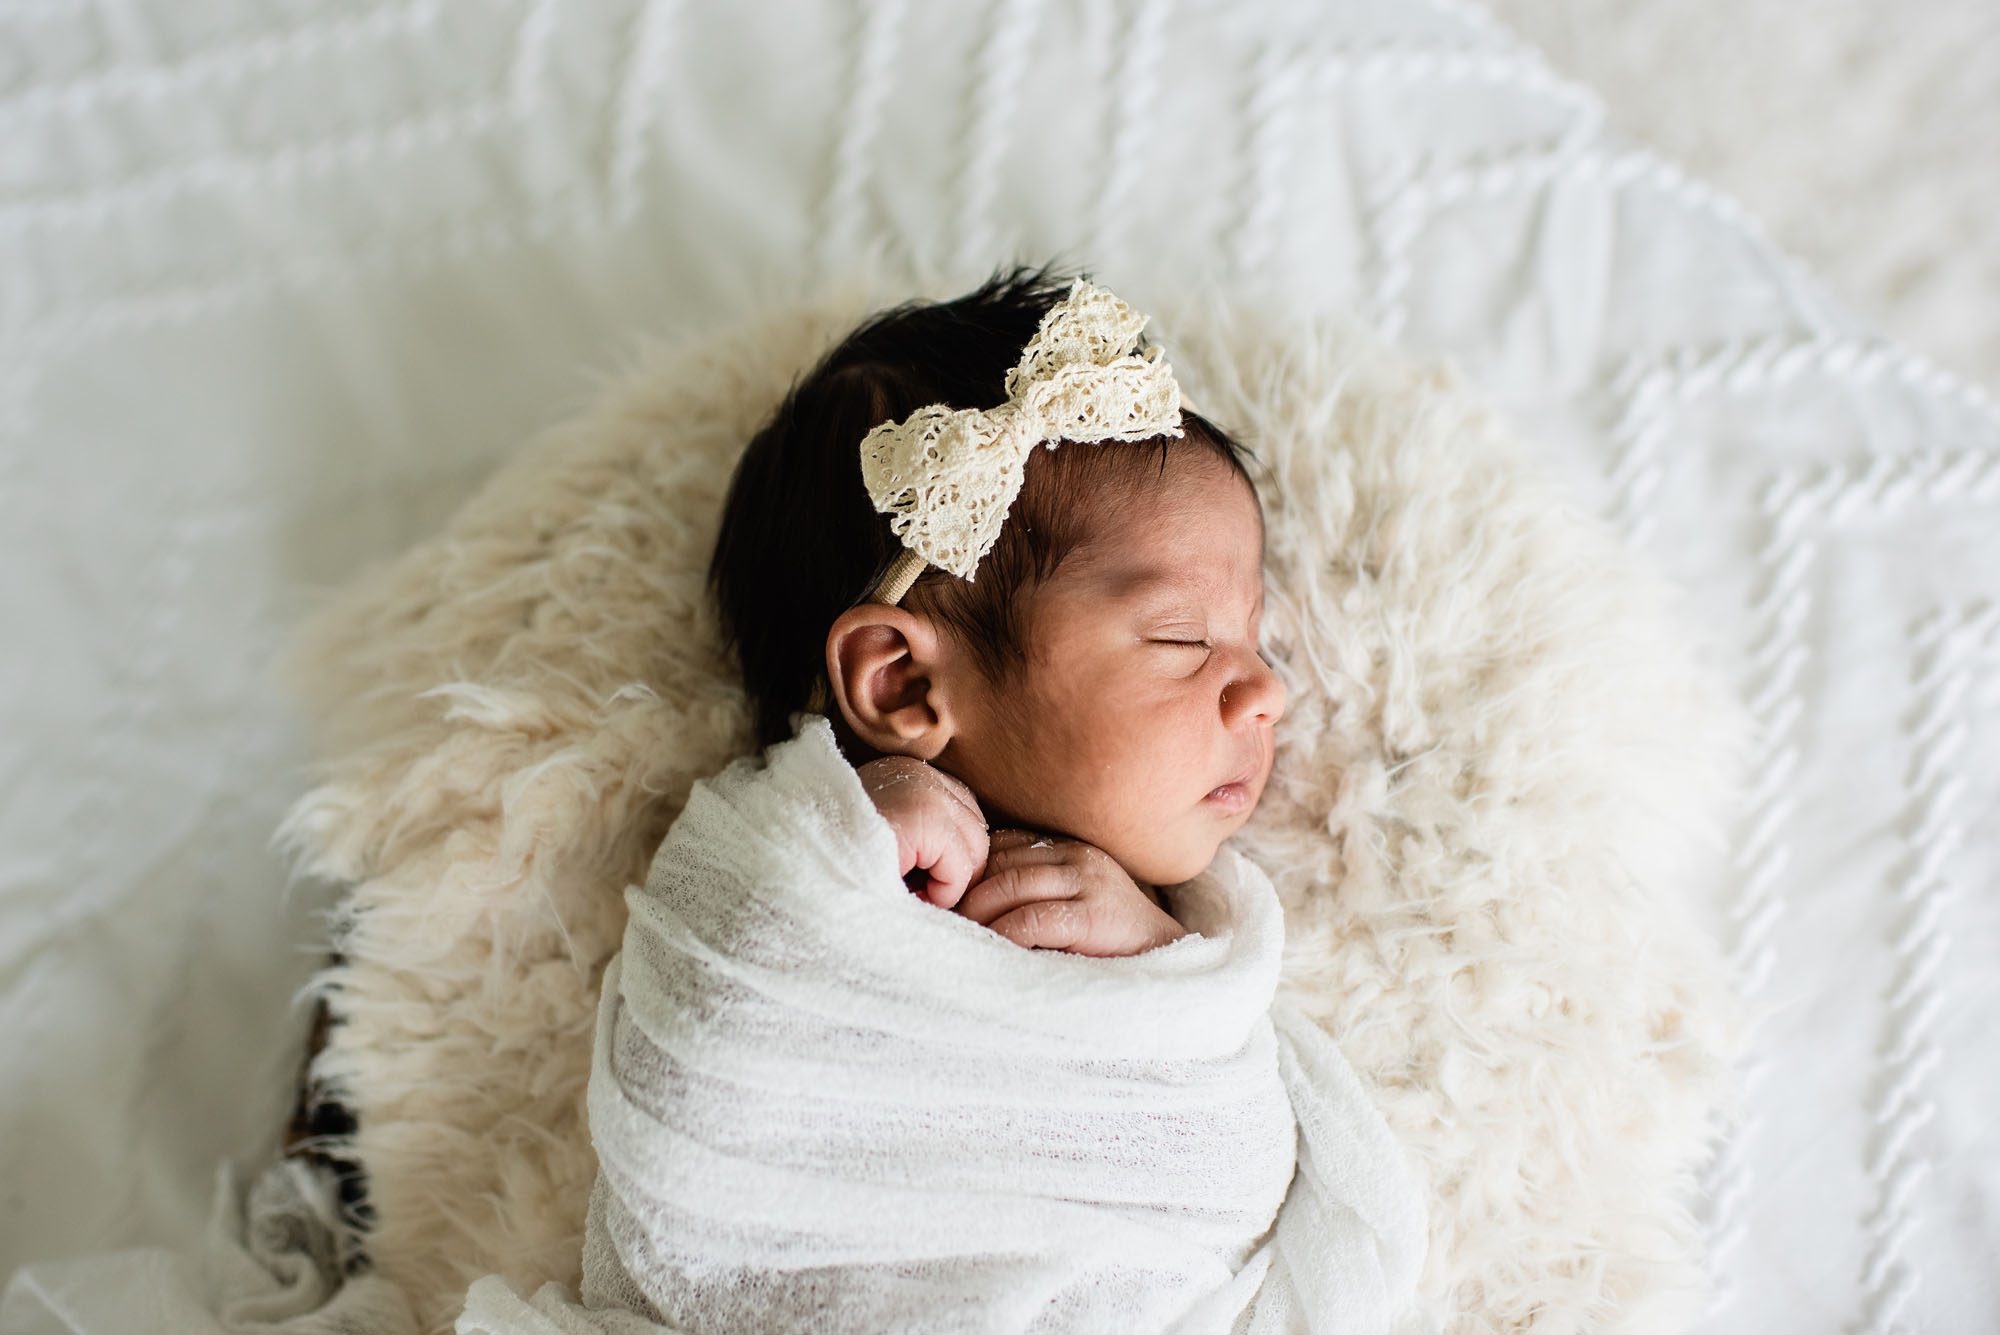 San Antonio Newborn Photographer, newborn baby asleep in basket on white bed